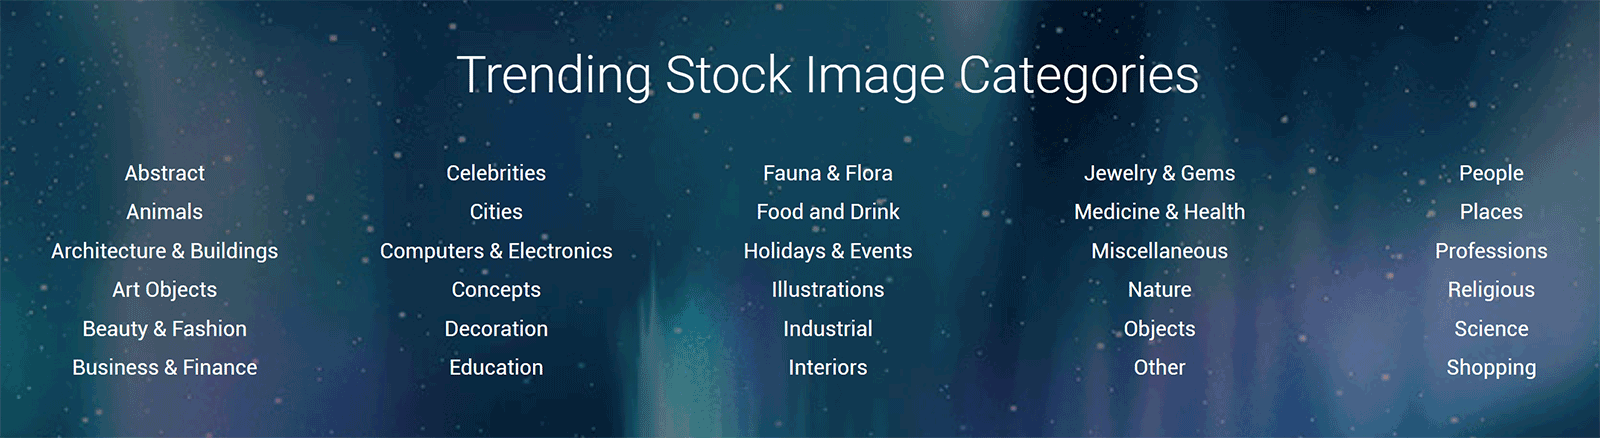 Stock Image Categories